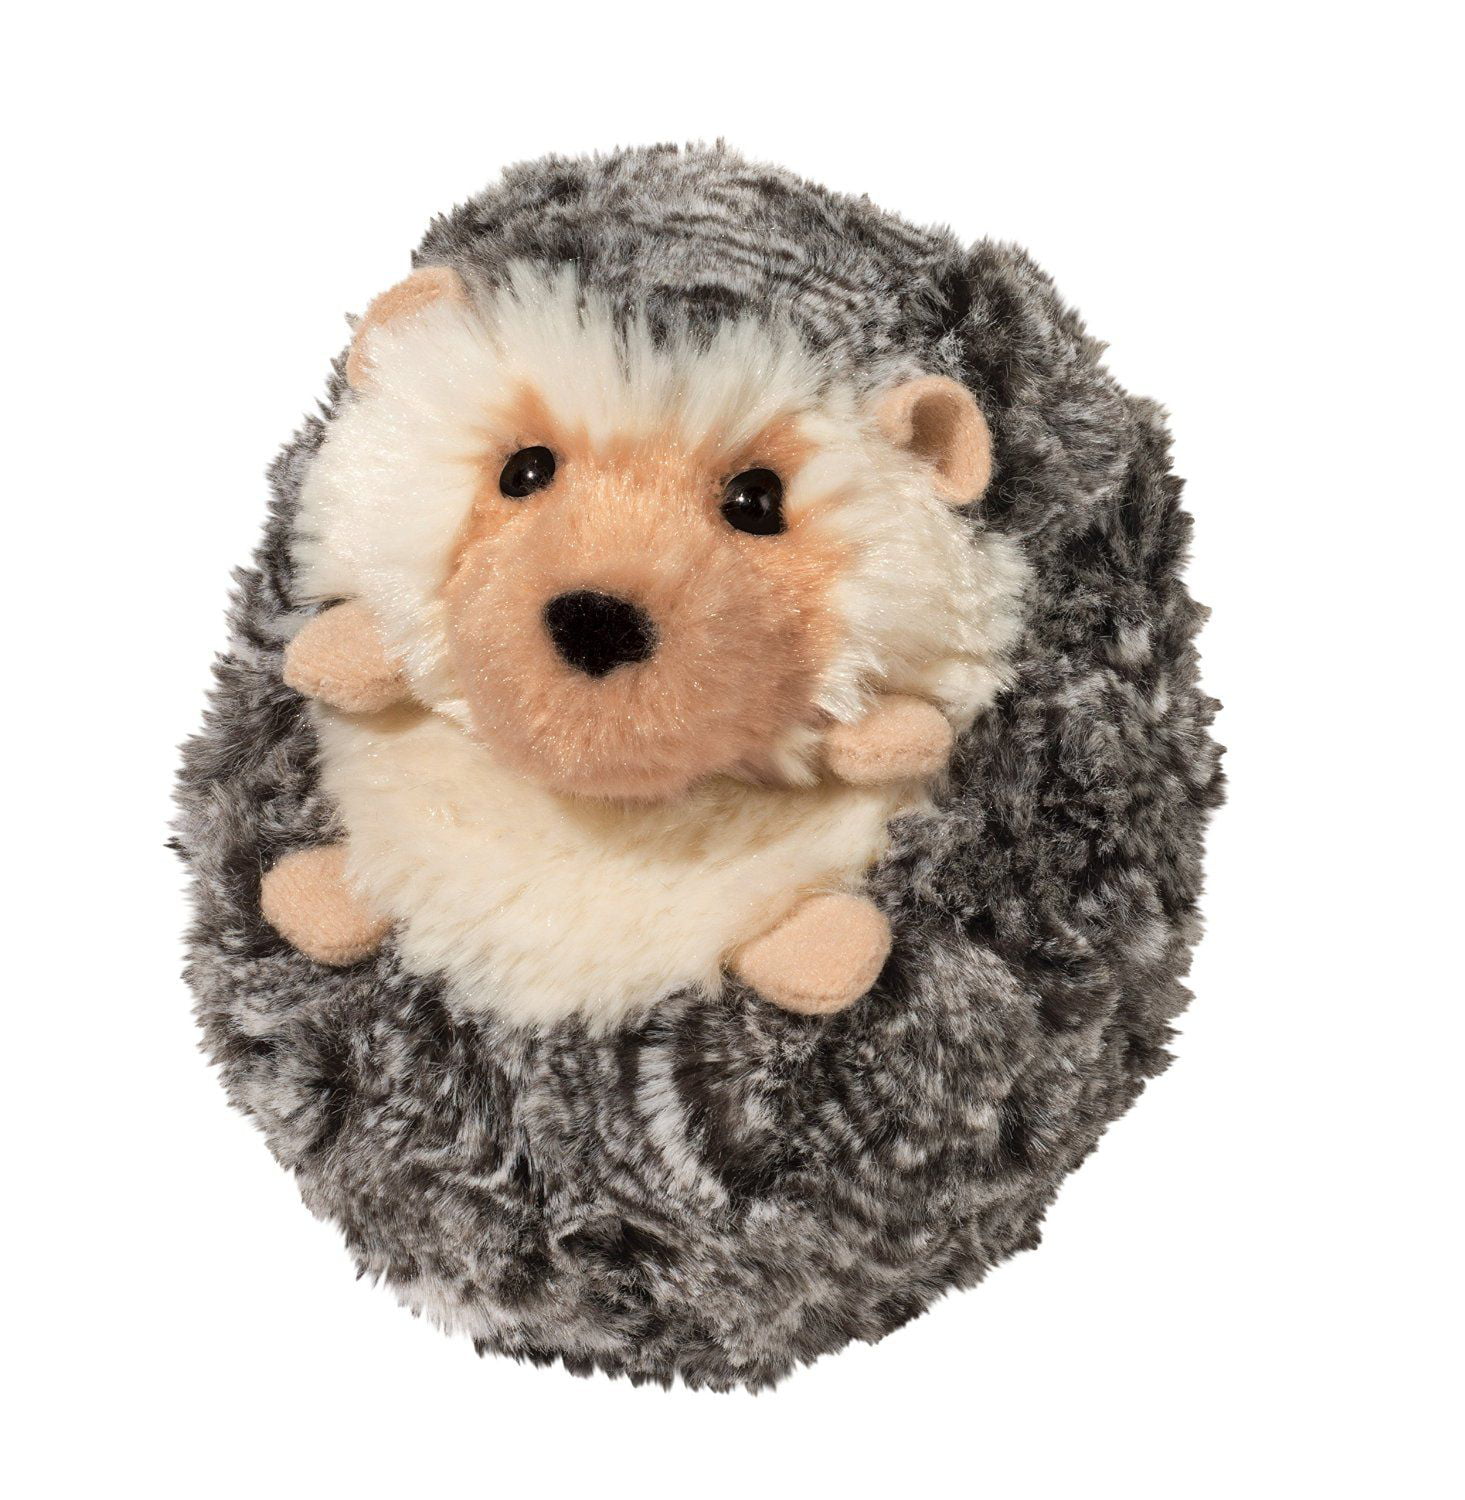 8 Inch Large Spunky Hedgehog Plush Stuffed Animal by Douglas for sale online 